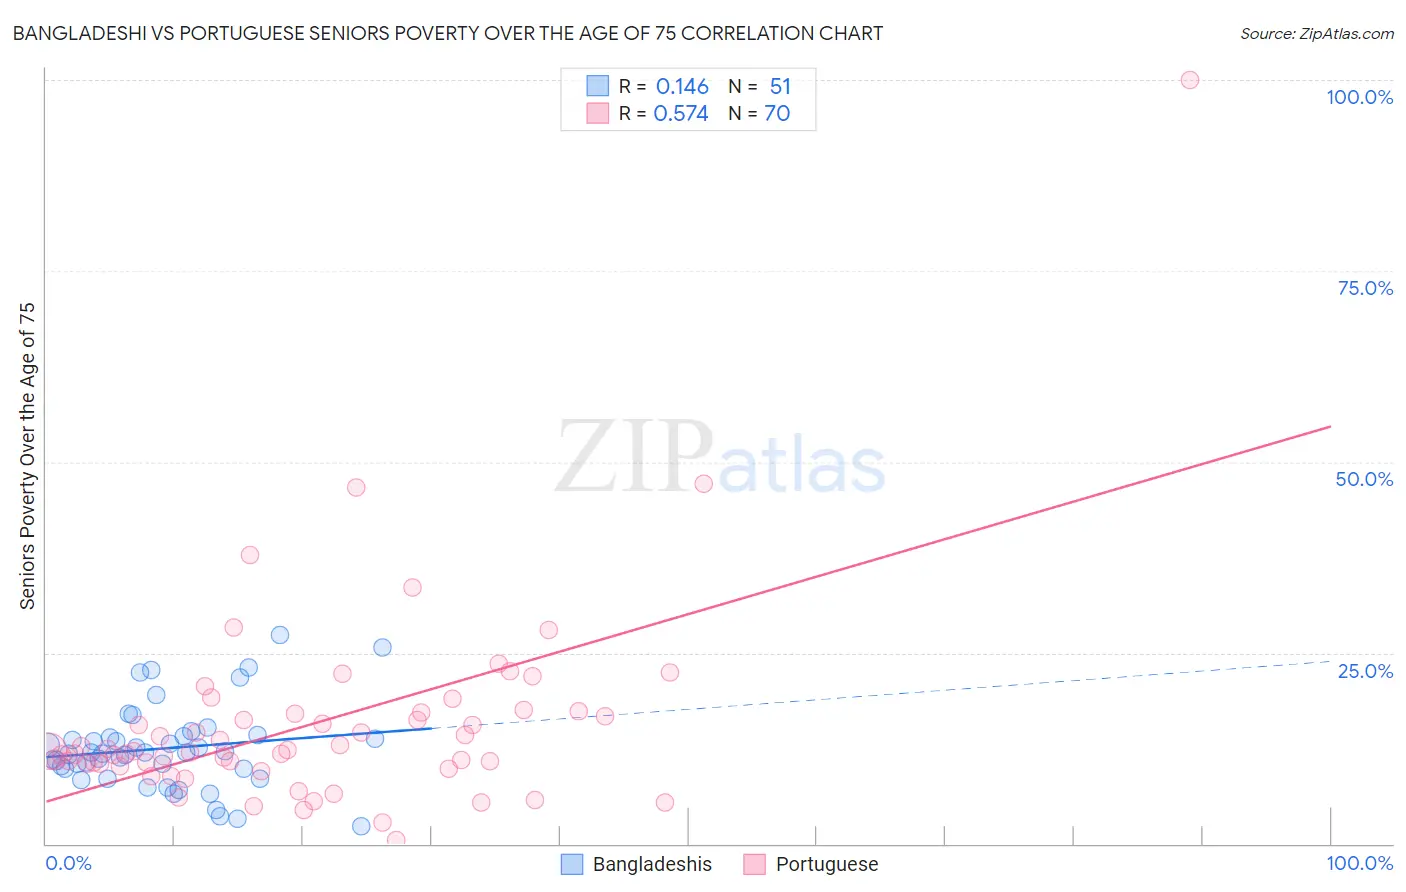 Bangladeshi vs Portuguese Seniors Poverty Over the Age of 75